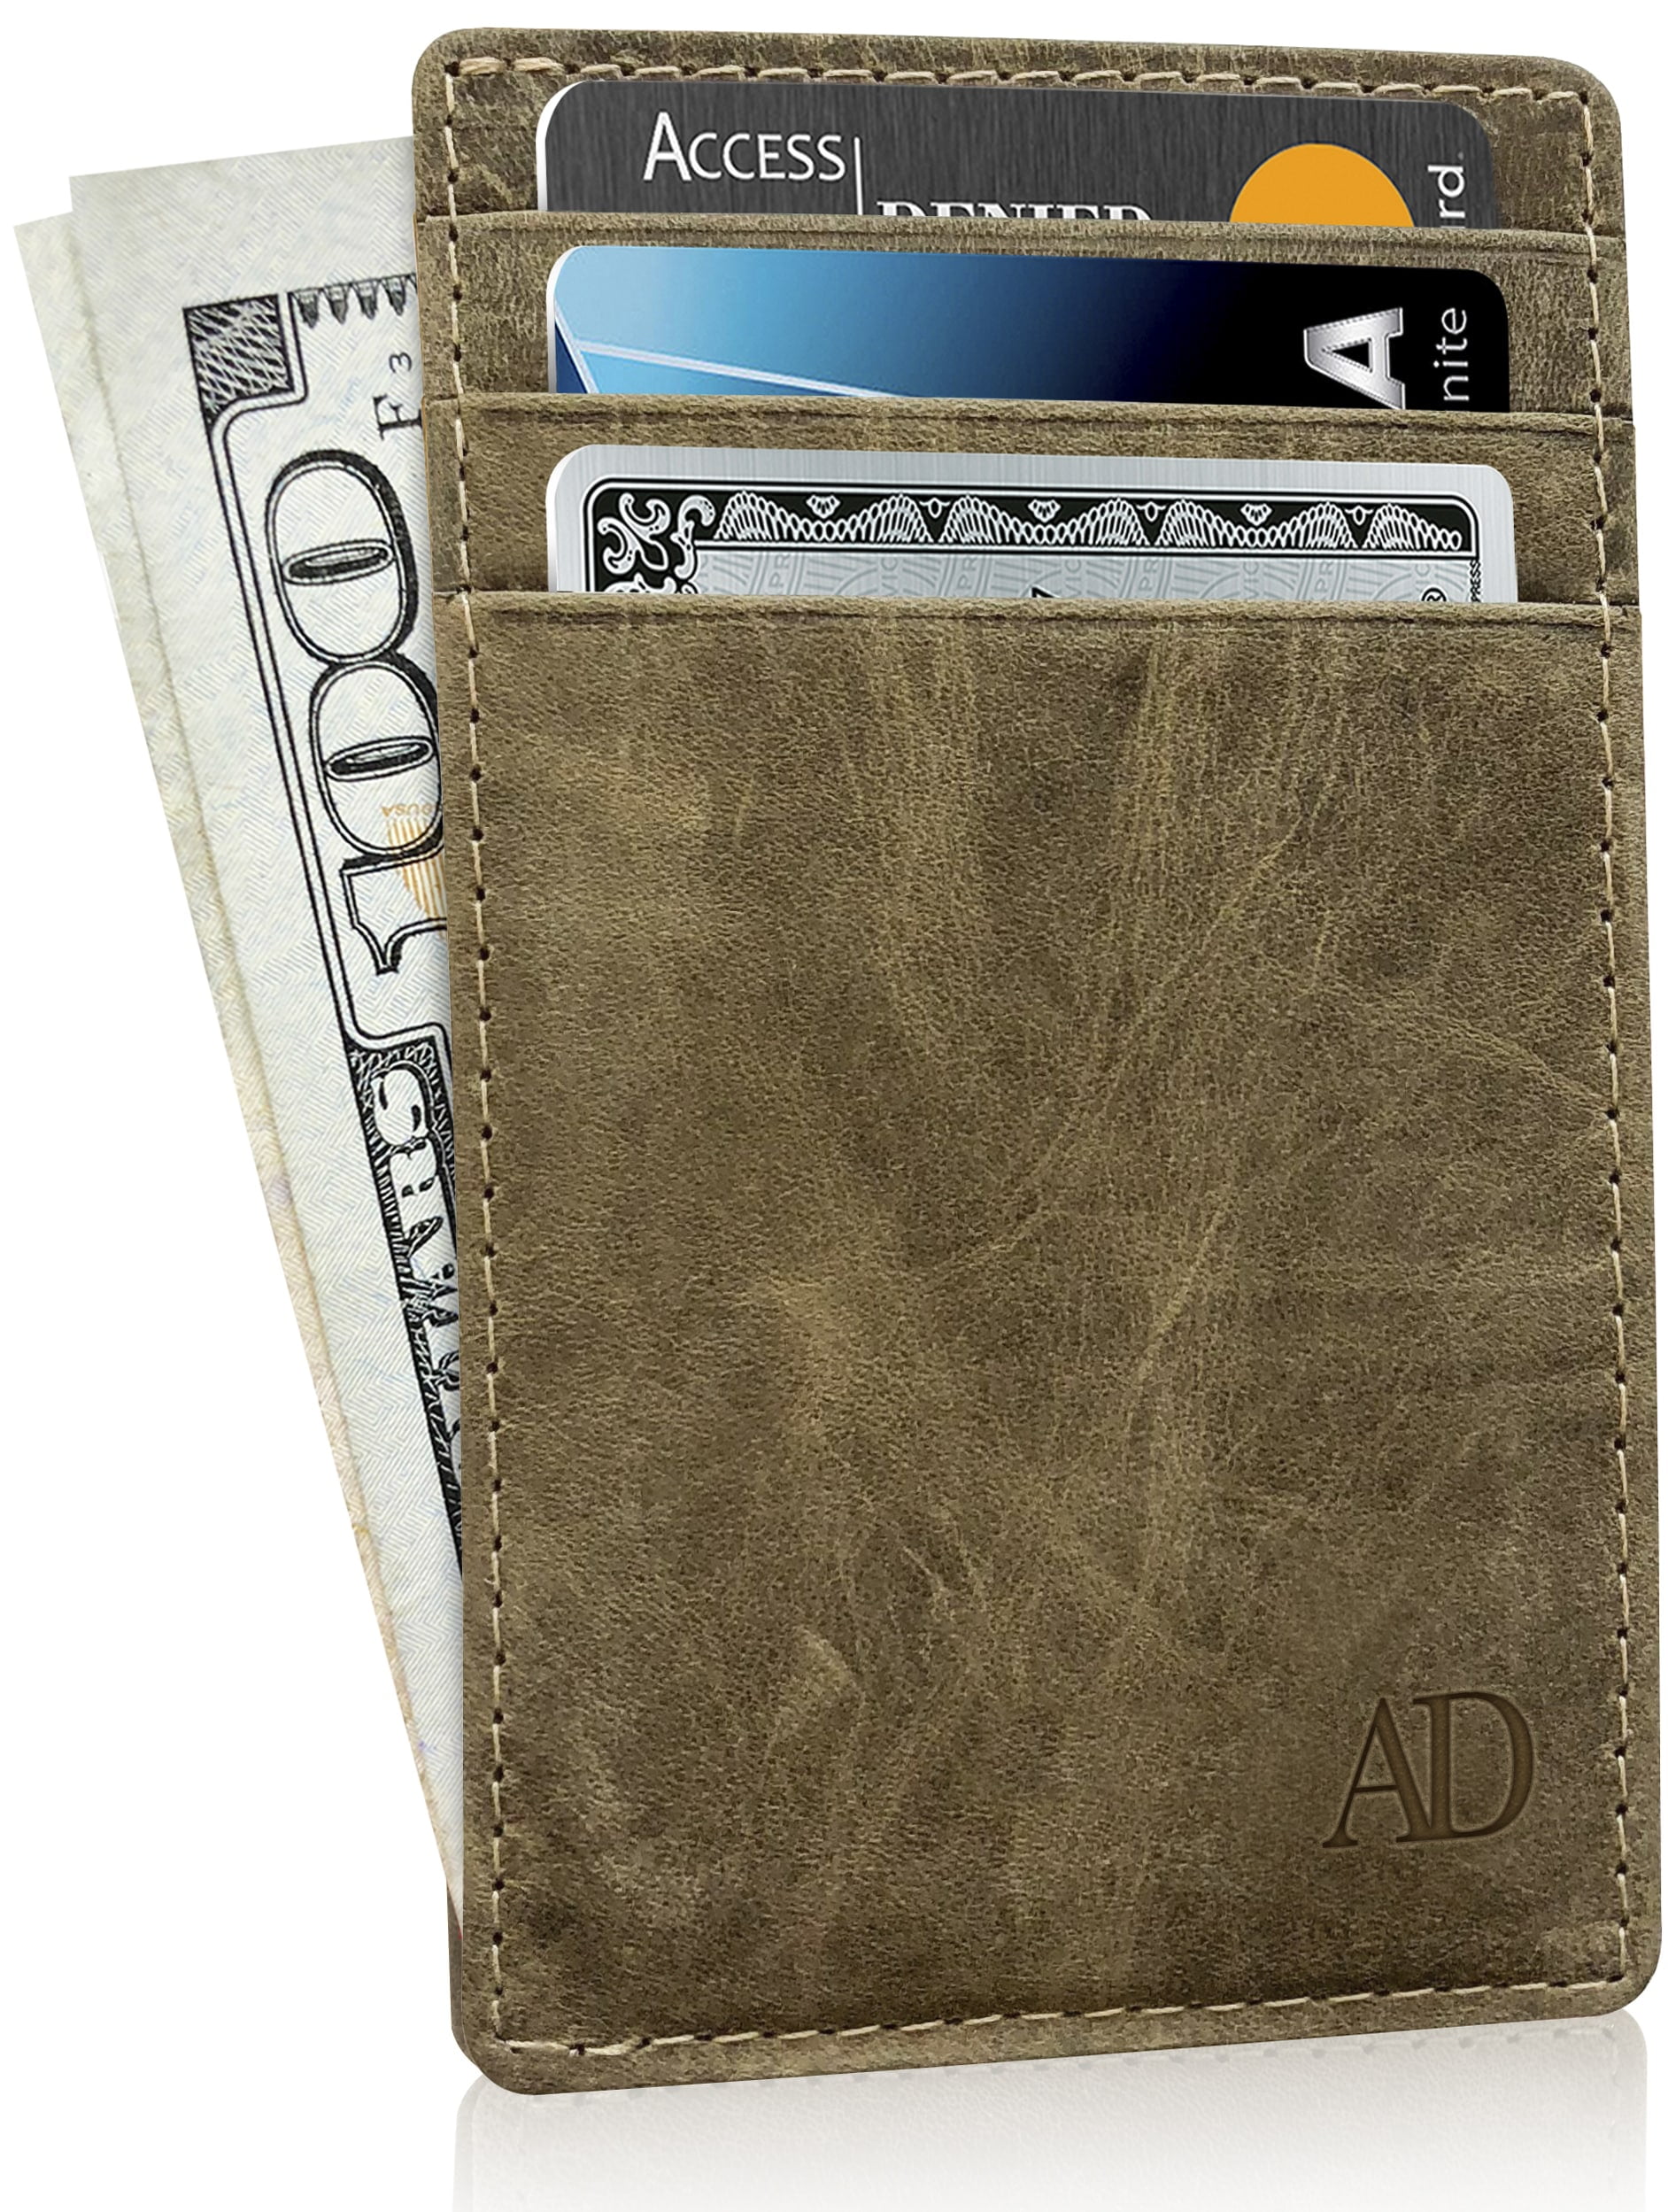 Slim Minimalist Front Pocket RFID Blocking Leather Wallets Card for Men&Women